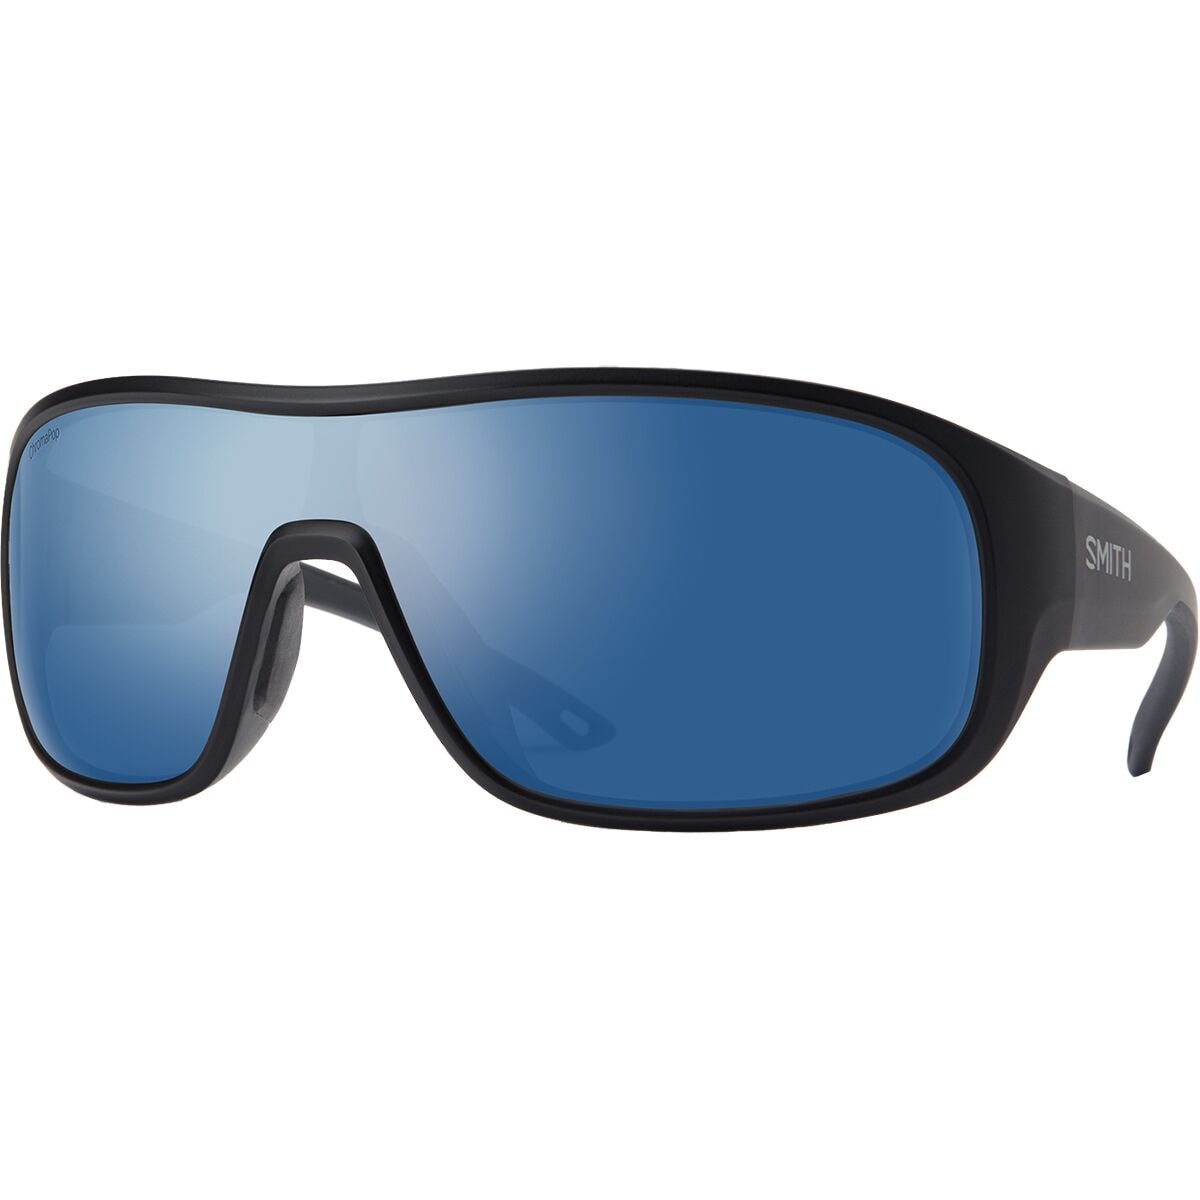 Smith Optics Spinner Sunglasses - Matte Black / ChromaPop Polarized Blue Mirror